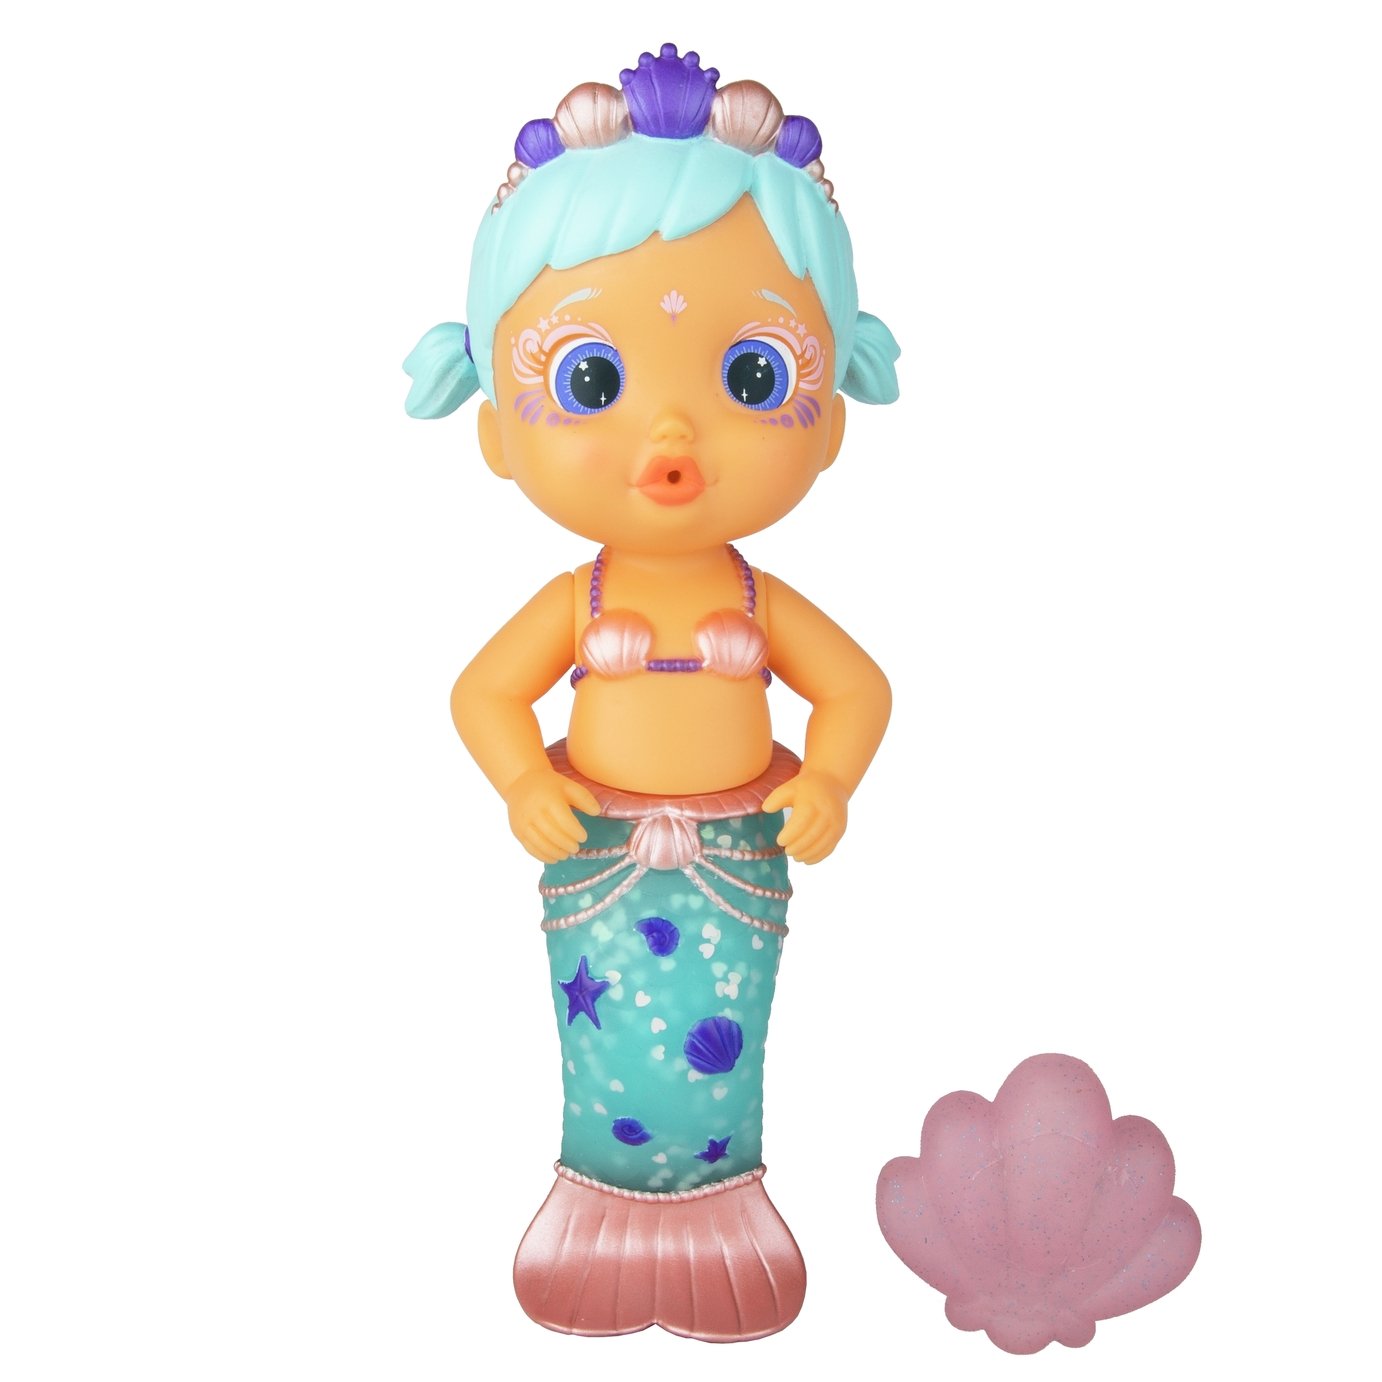 mermaid dolls argos